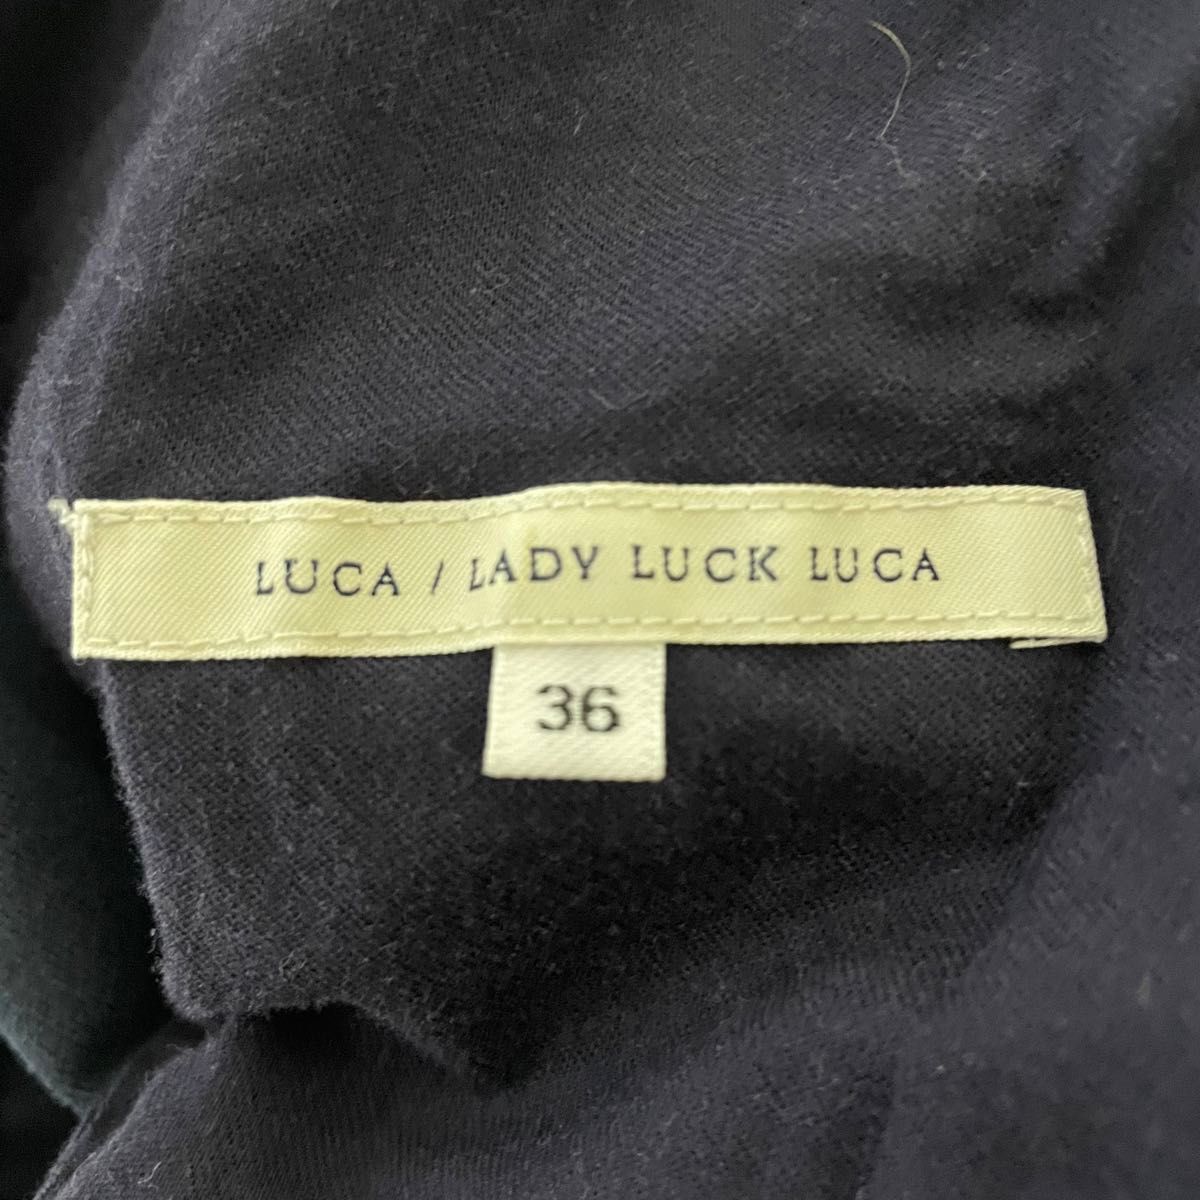 【LUCA/LADY LUCK LUCA】スラックス ボトムス パンツ ストレッチ カジュアルパンツ ネイビー(36)